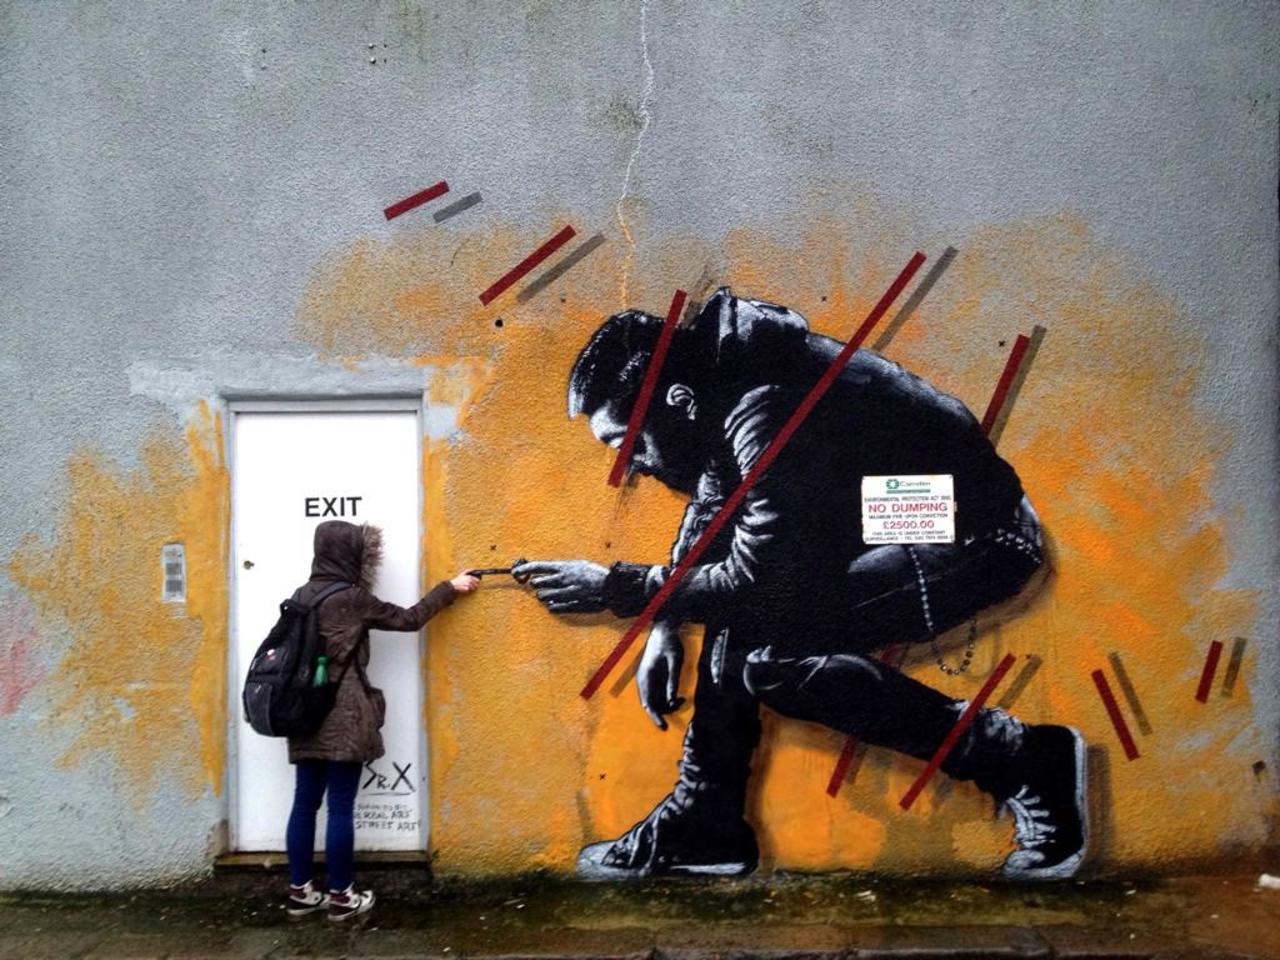 RT "@GoogleStreetArt: 'Exit' 

Superb Street Art by Sr.X in London 
Pic - Ugz 

#art #arte #graffiti #streetart http://t.co/VPBxoknoJM"